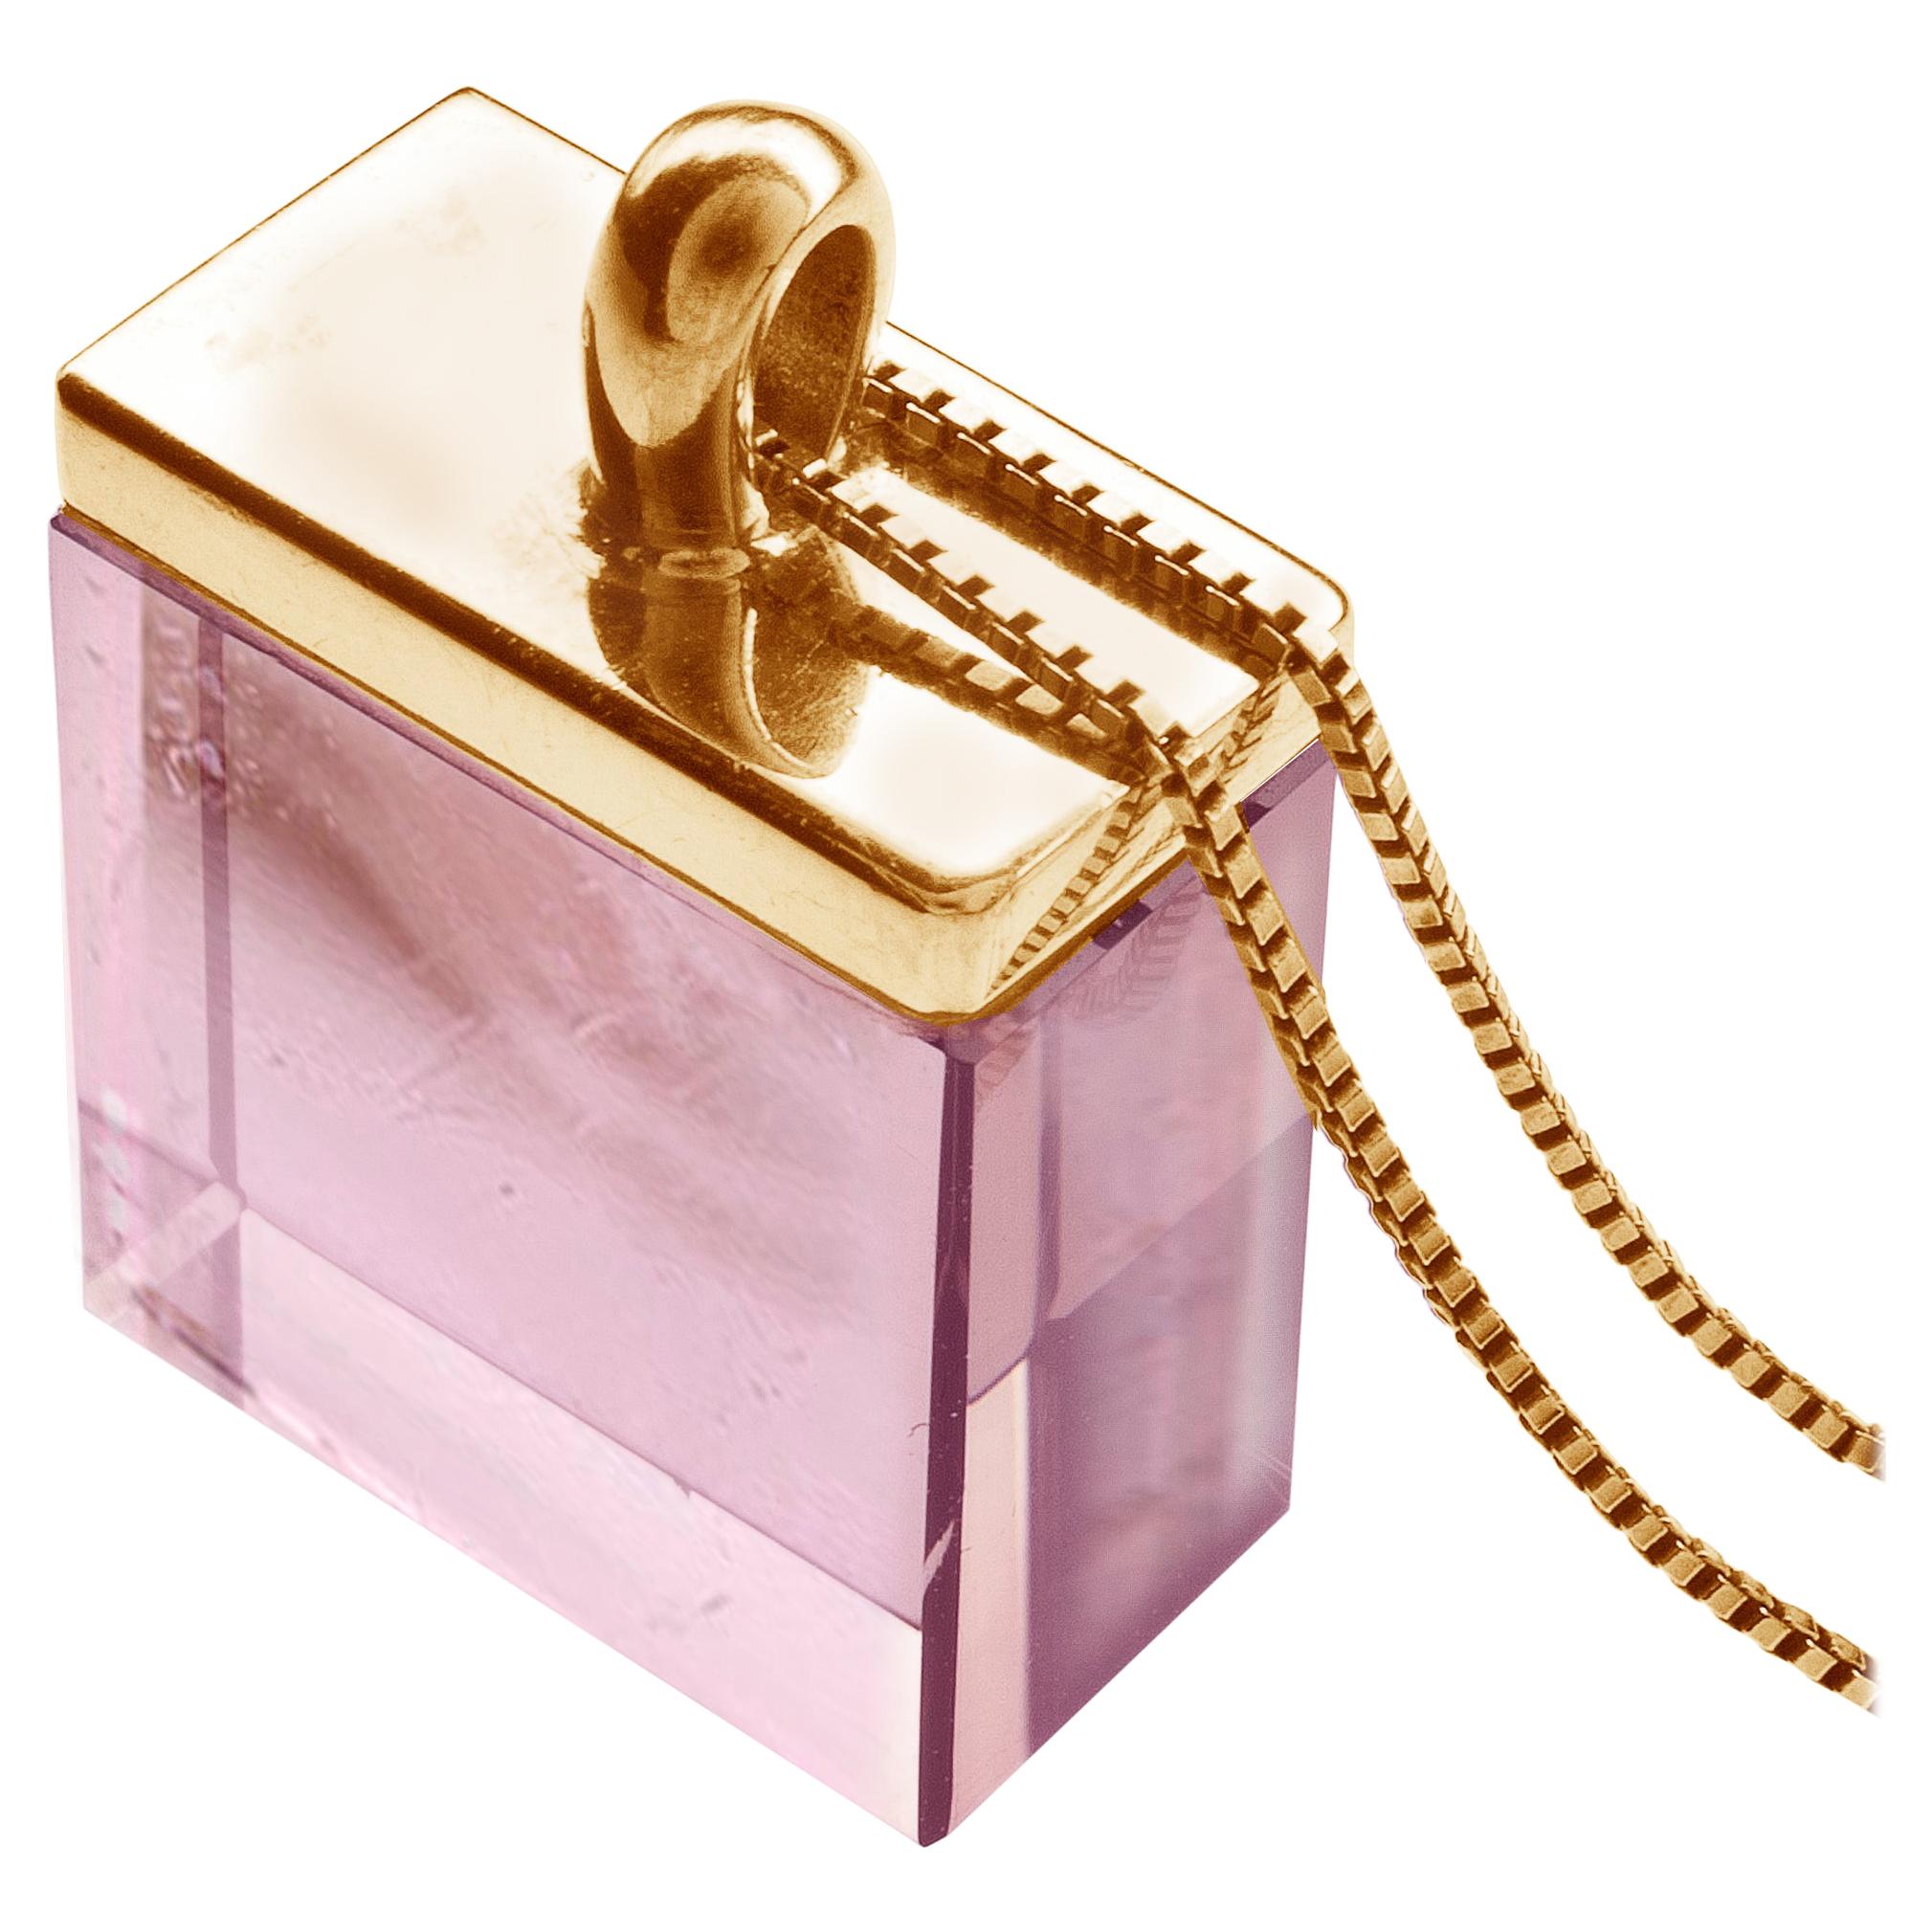 18 Karat Rose Gold Contemporary Pendant Necklace with Natural Pink Tourmaline